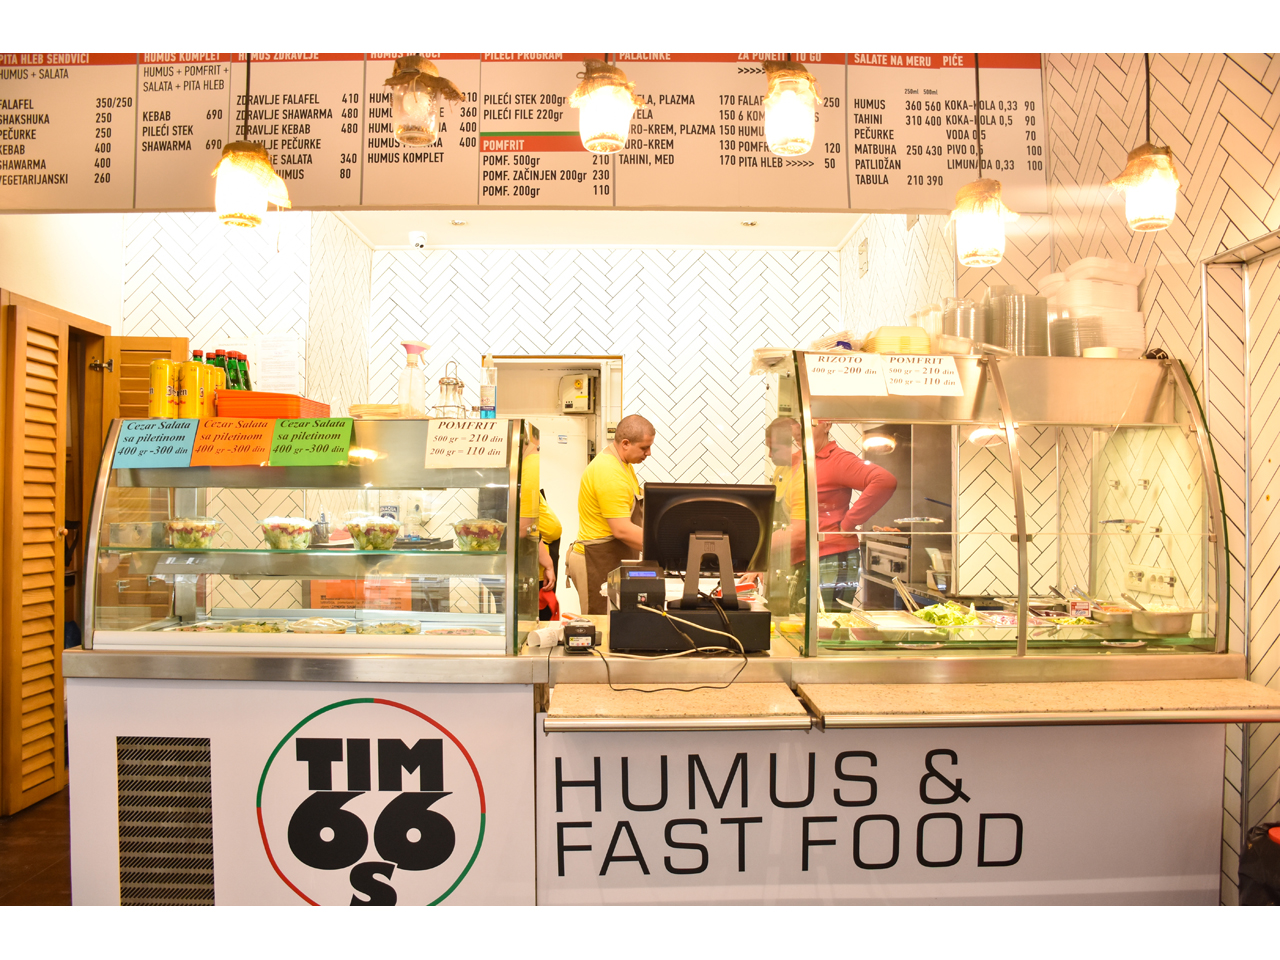 HUMUS & FAST FOOD BAR TIM 66 S Vegetarijanski restorani, makrobiotika Beograd - Slika 2